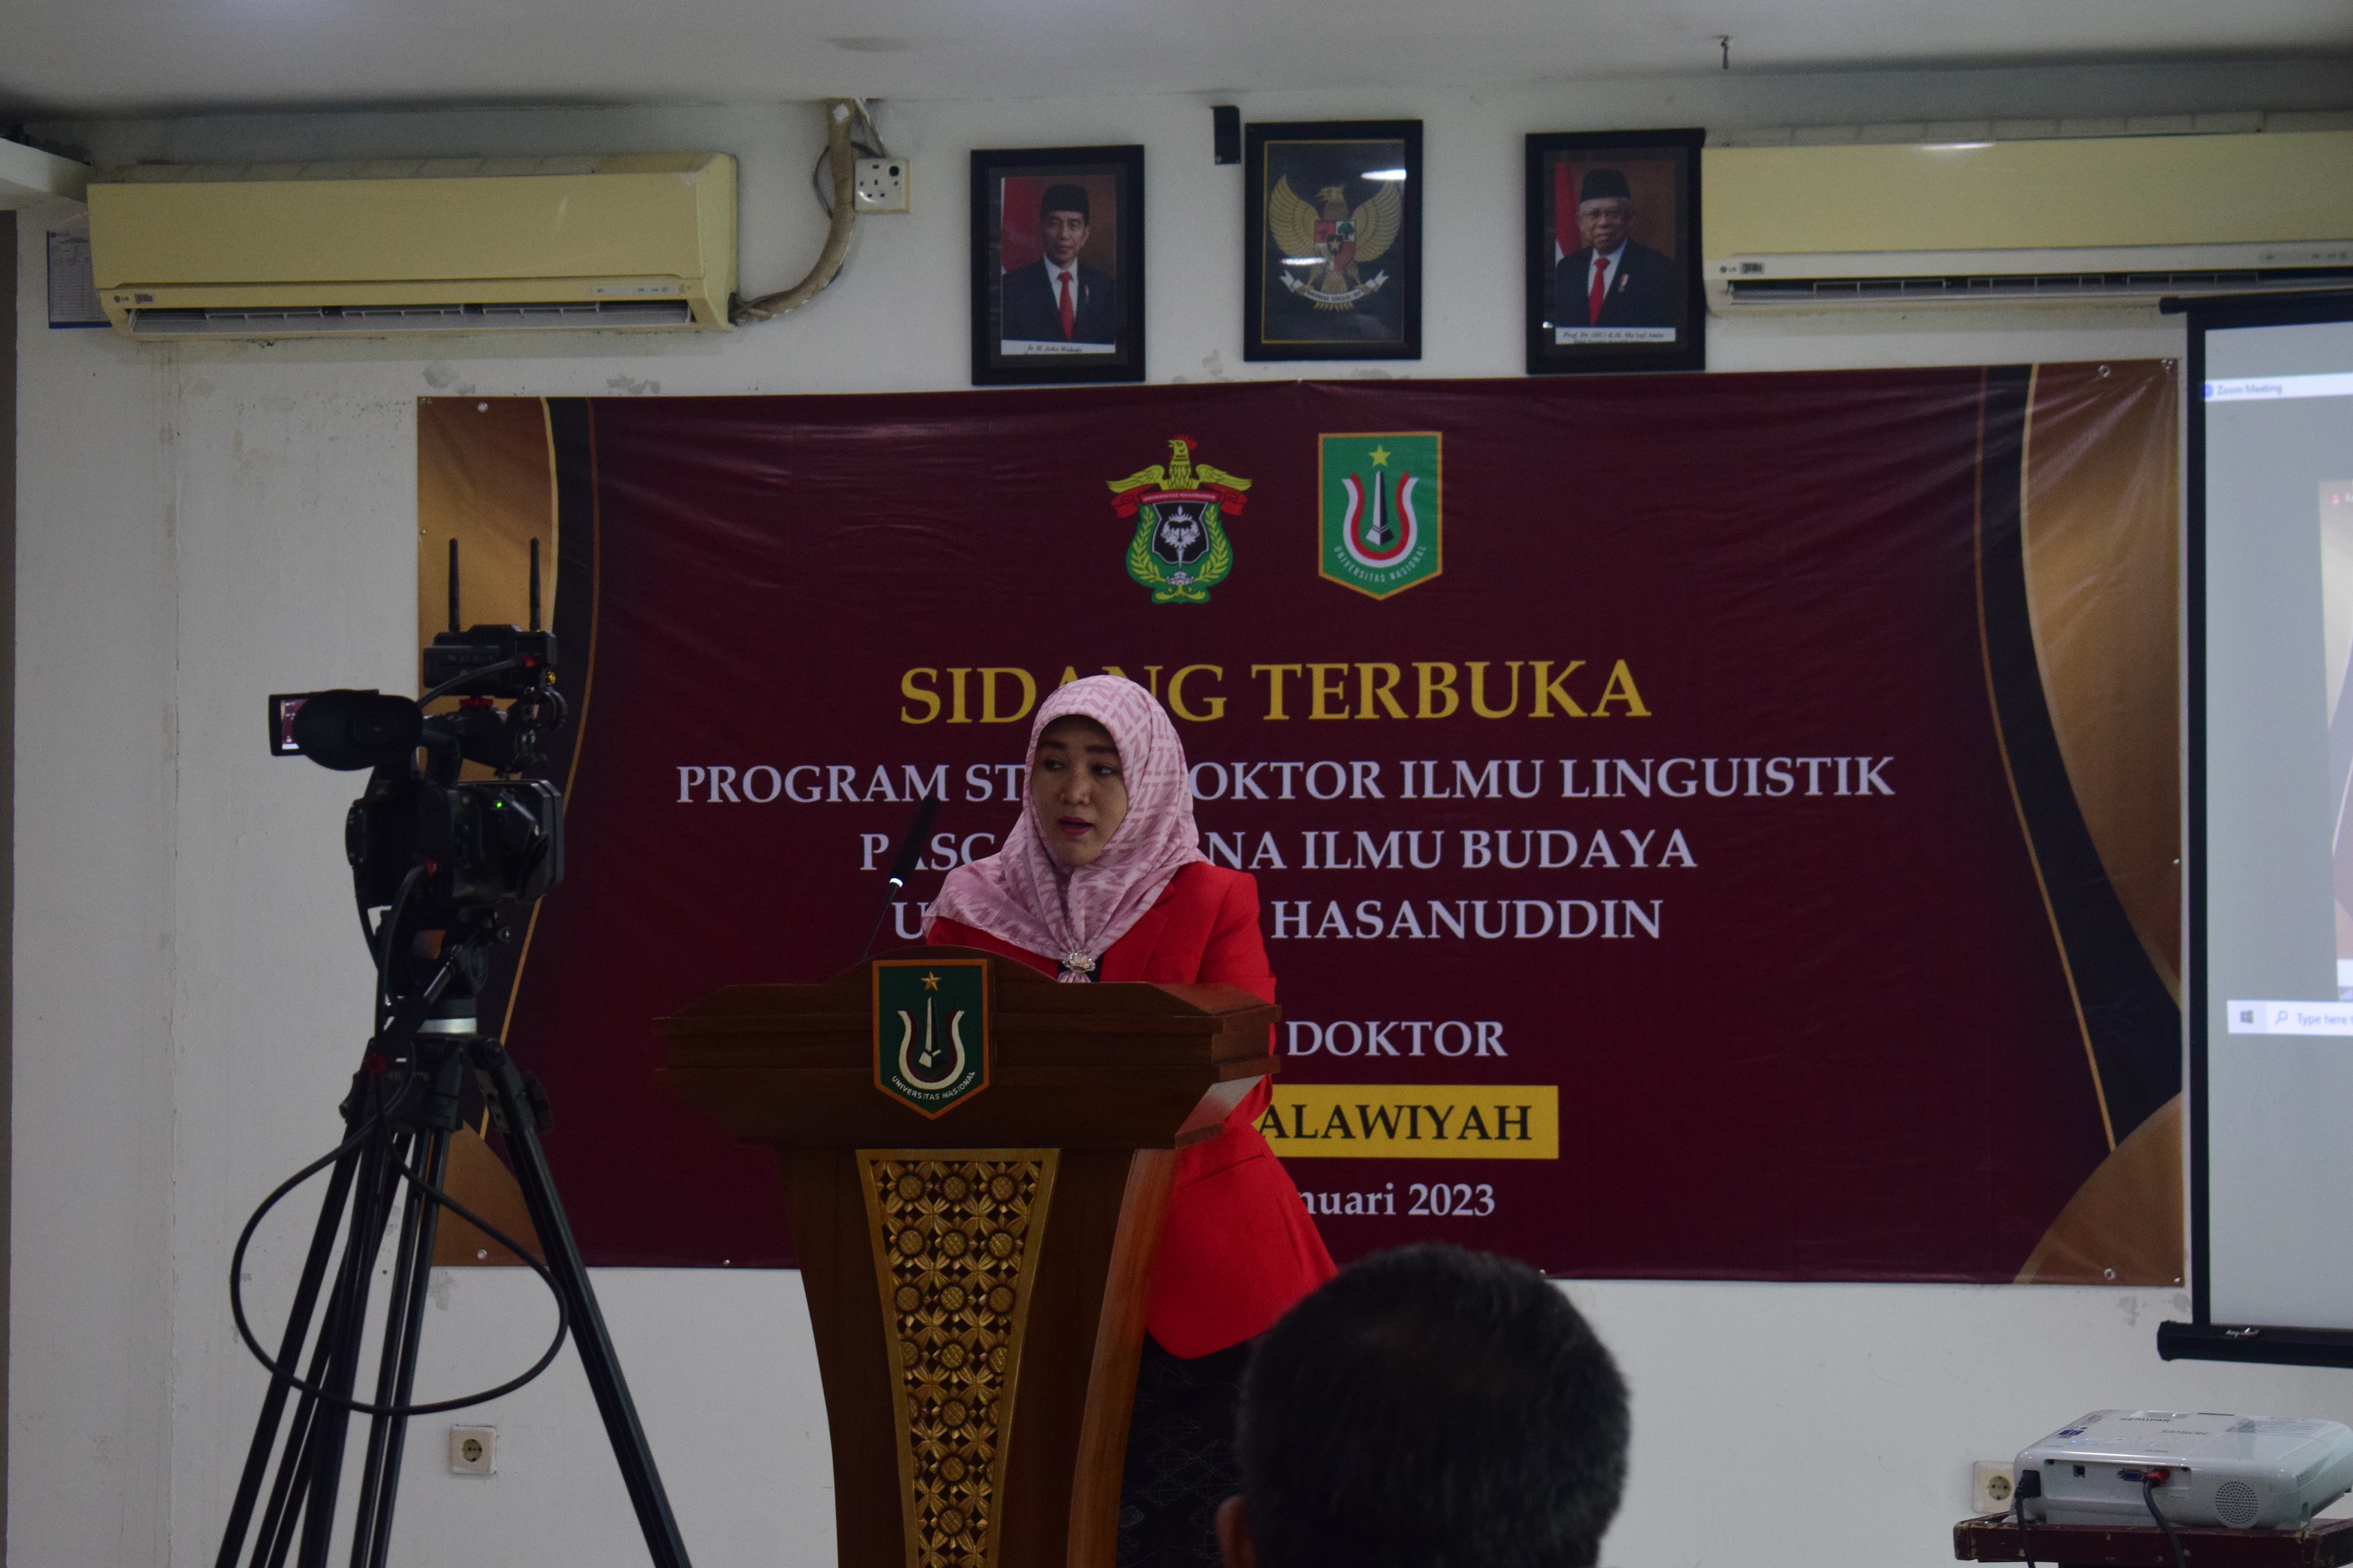 Sidang-Terbuka-Program-Doktoral-Dr.-Siti-Tuti-Alawiyah-S.S.-M.Hum-Secara-Hybird